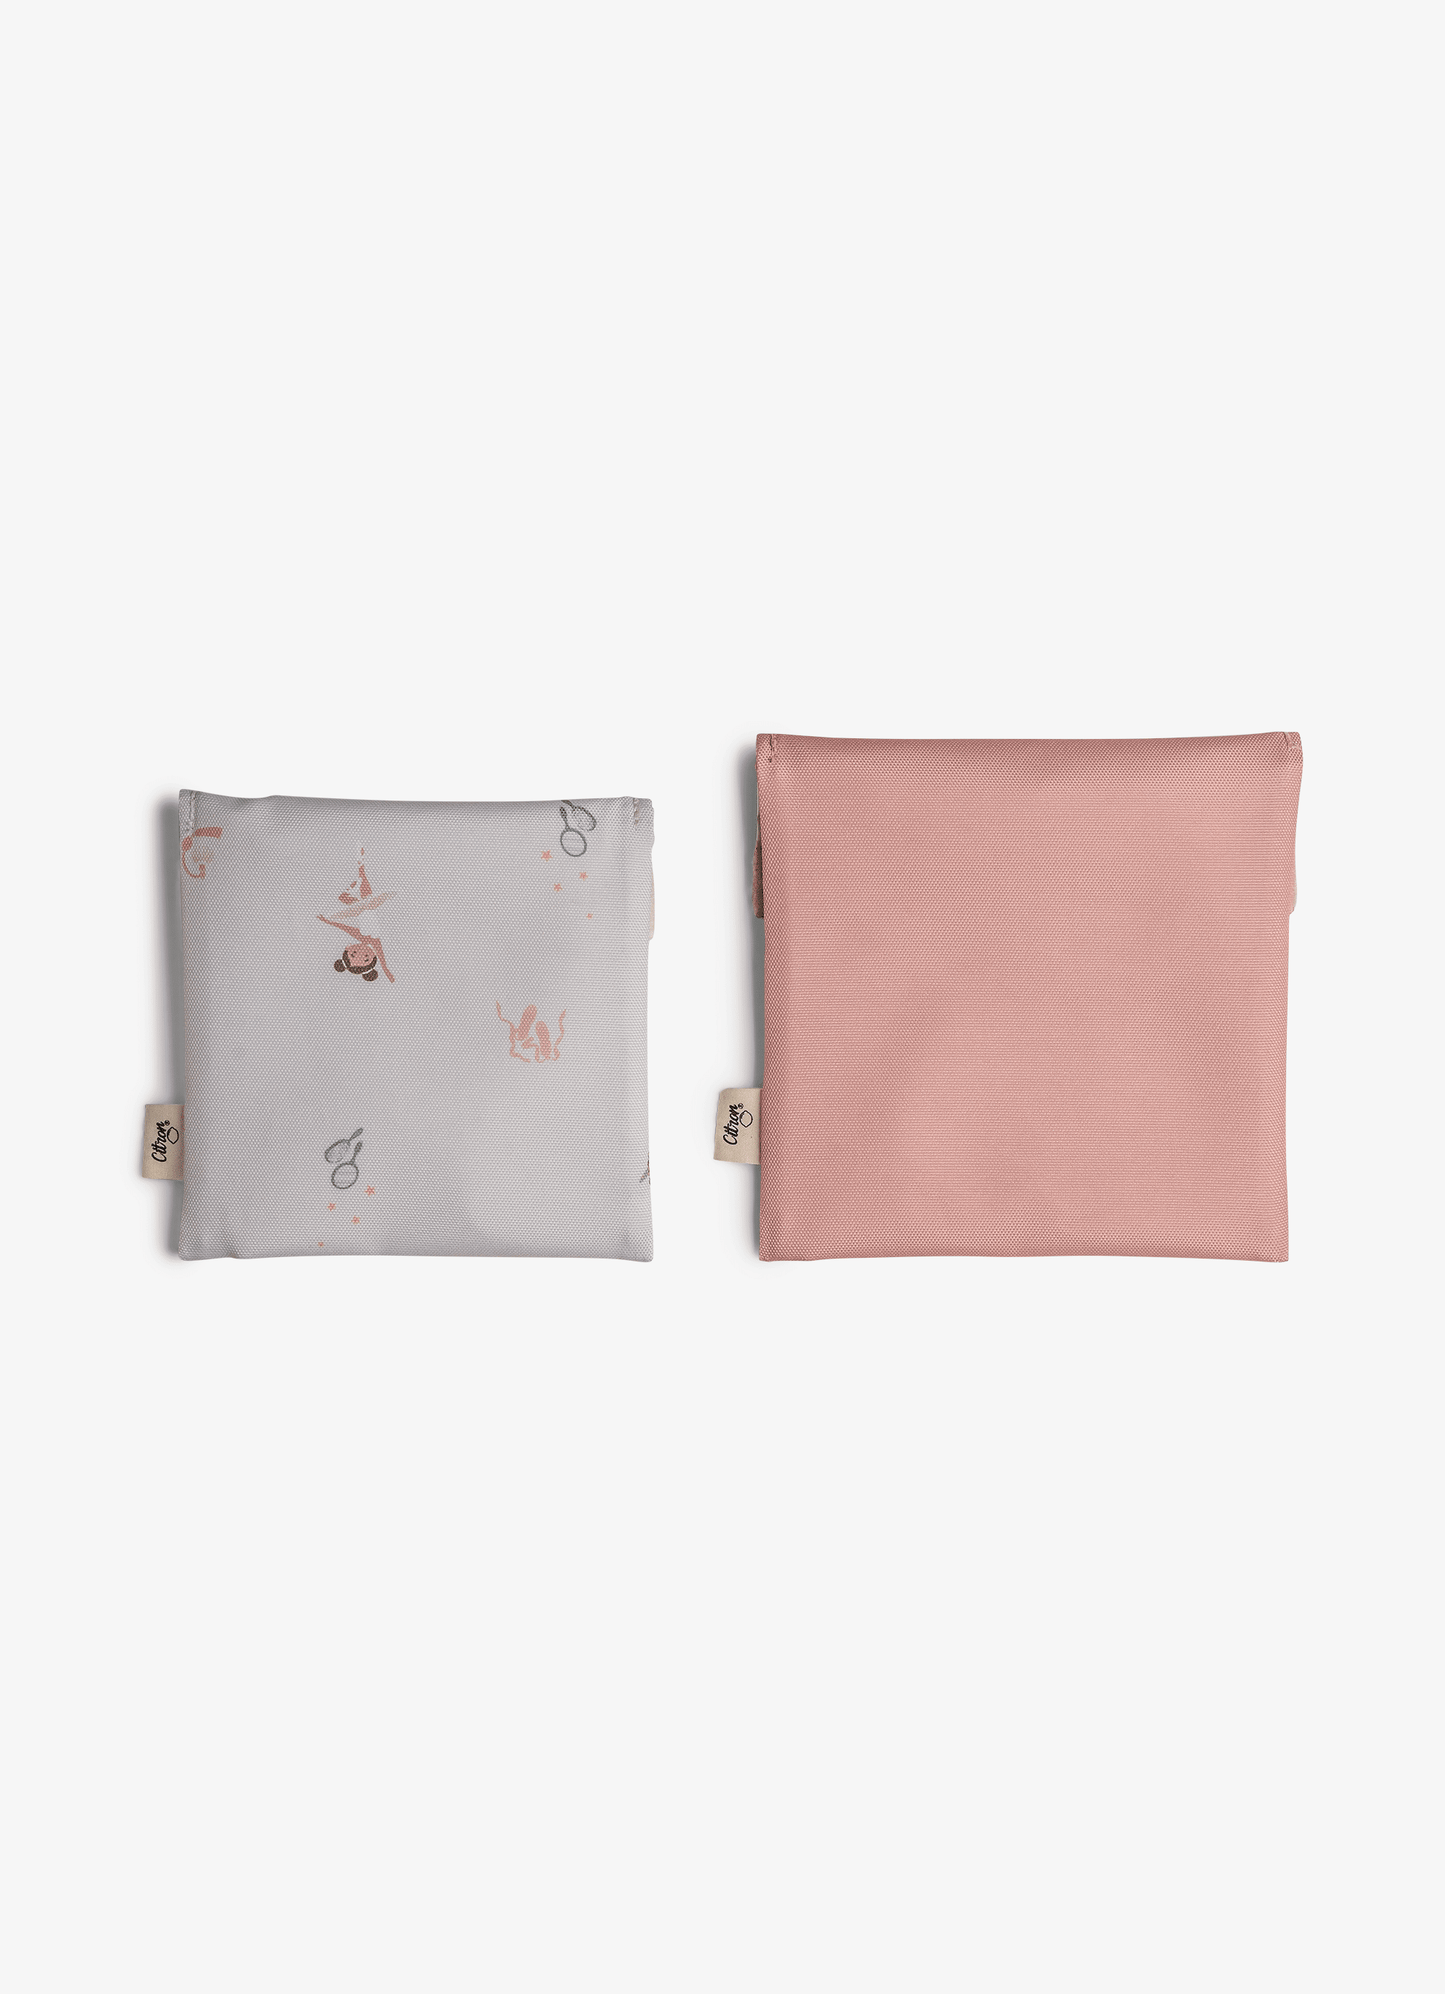 Reusable Sandwich Bag - Set of 2 - Ballerina/Blush Pink